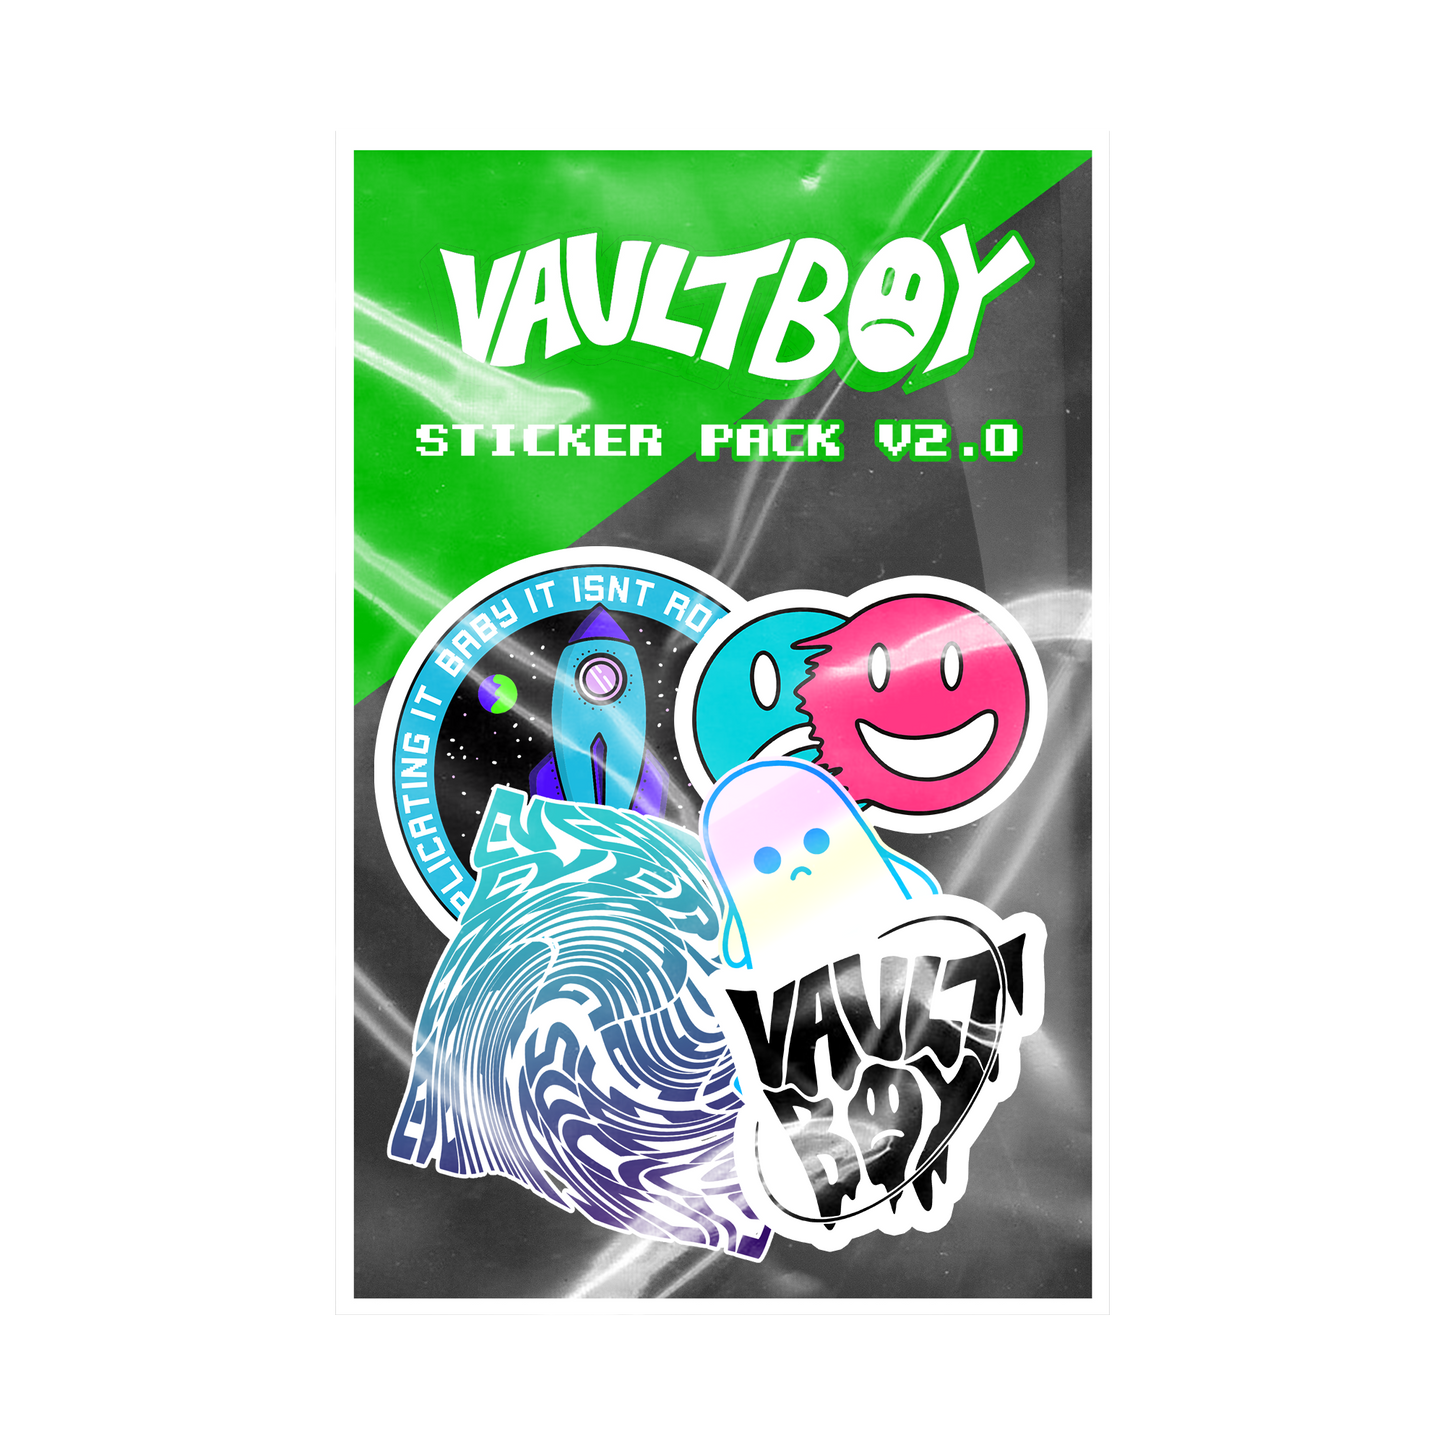 vaultboy sticker pack v2.0